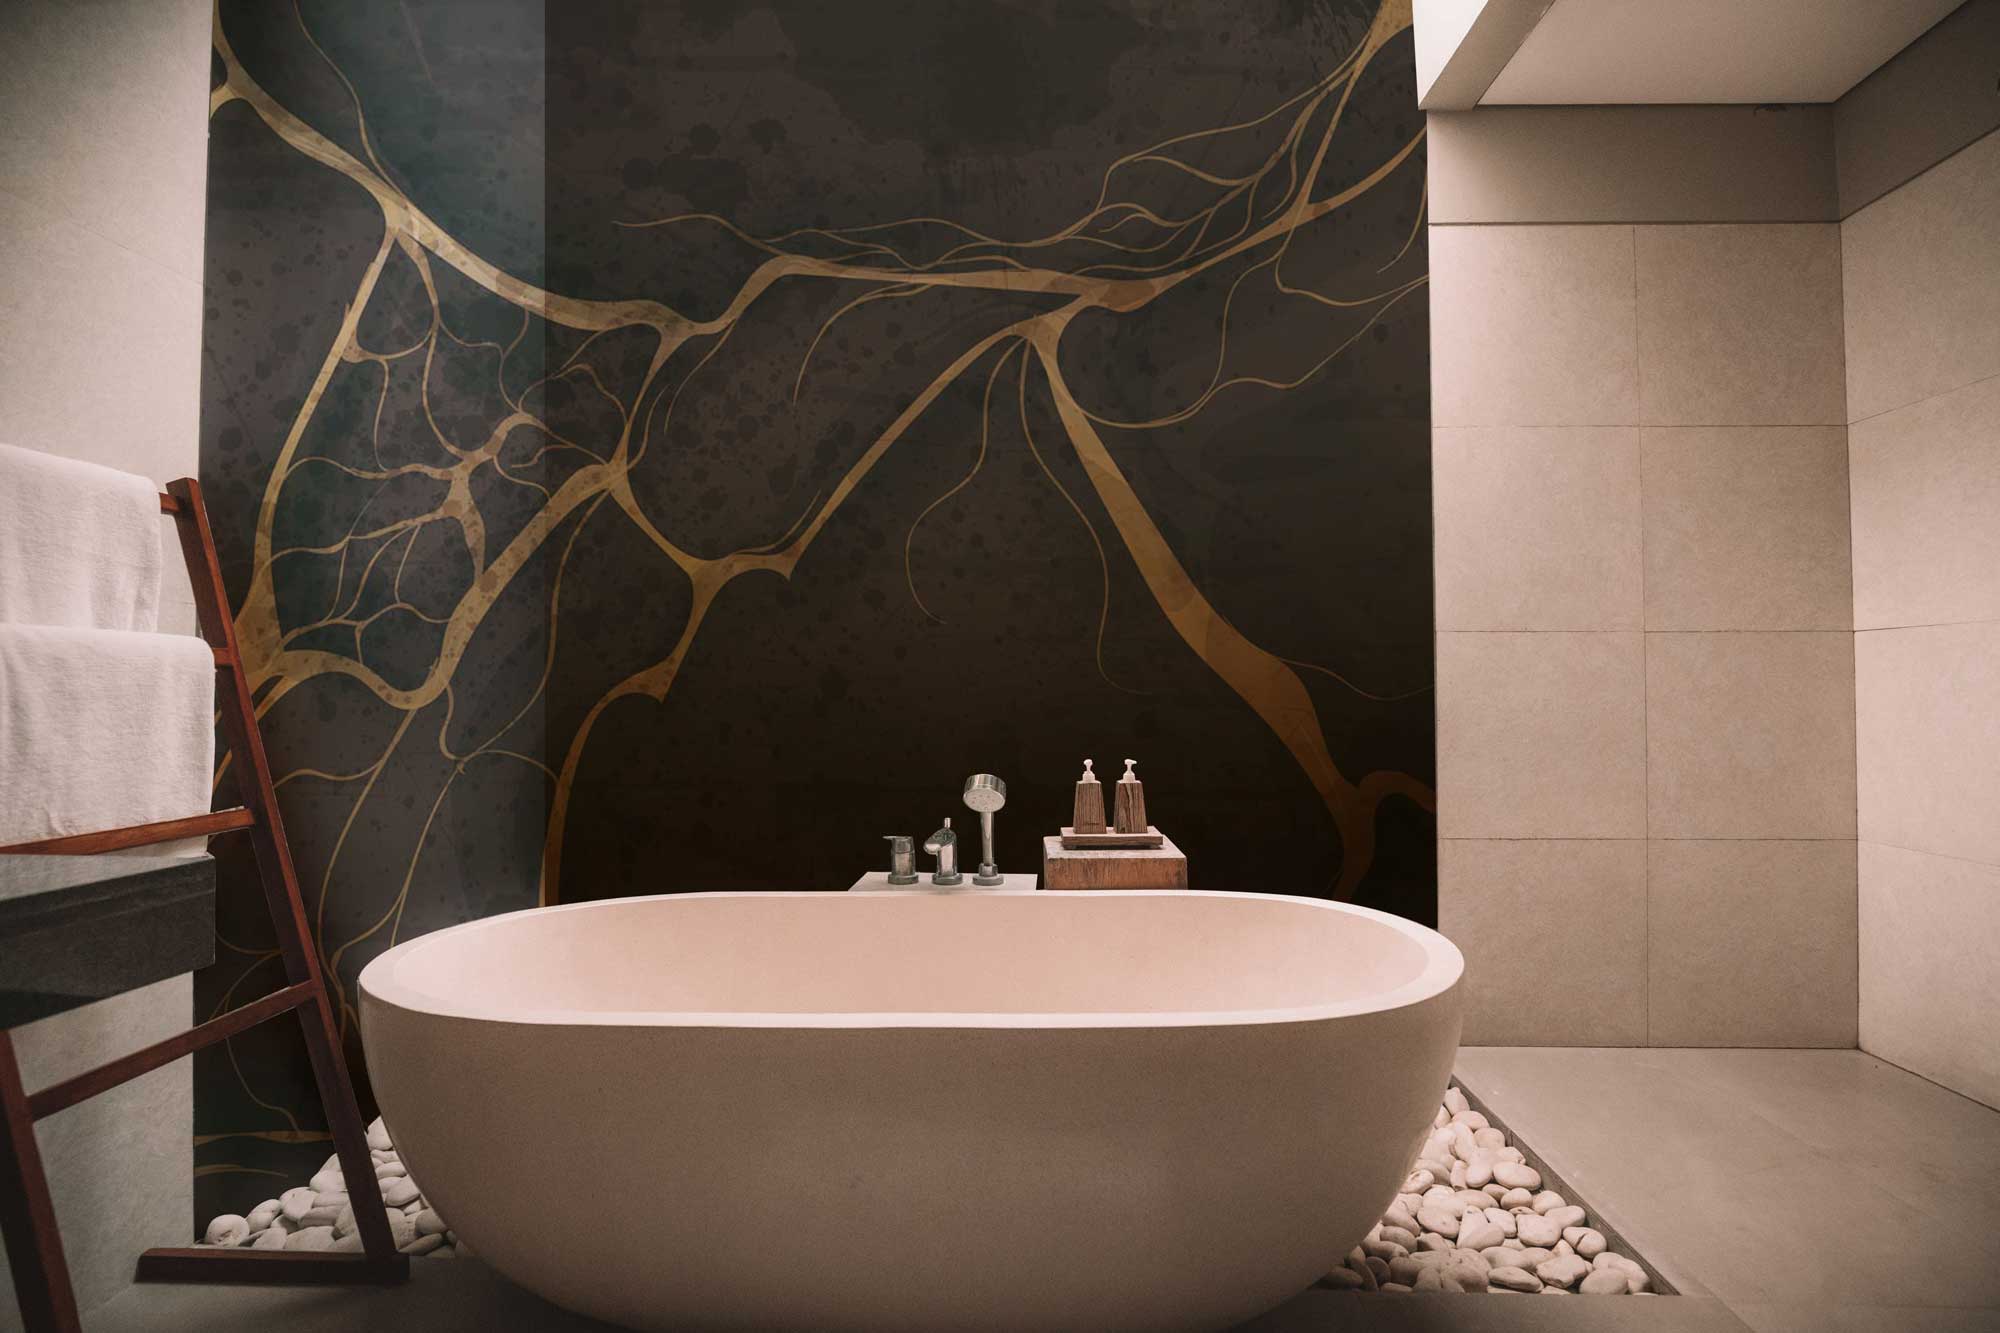 Download Modest Elegance in Bathroom Decor | Wallpapers.com